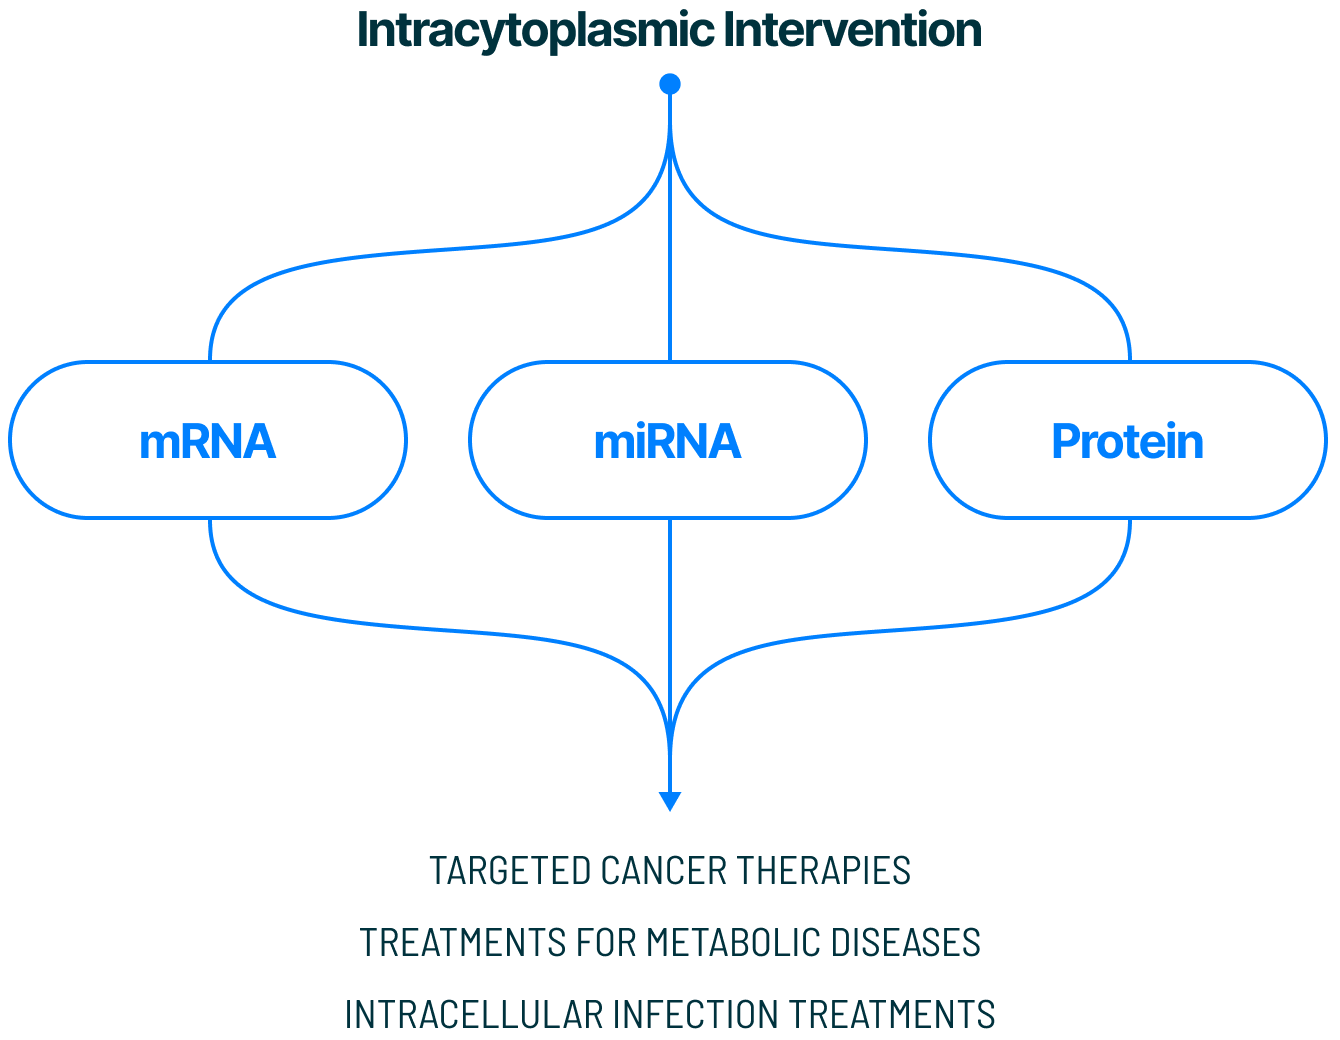 Intracytoplasmic intervention via mRNA, miRNA & protein for treatments